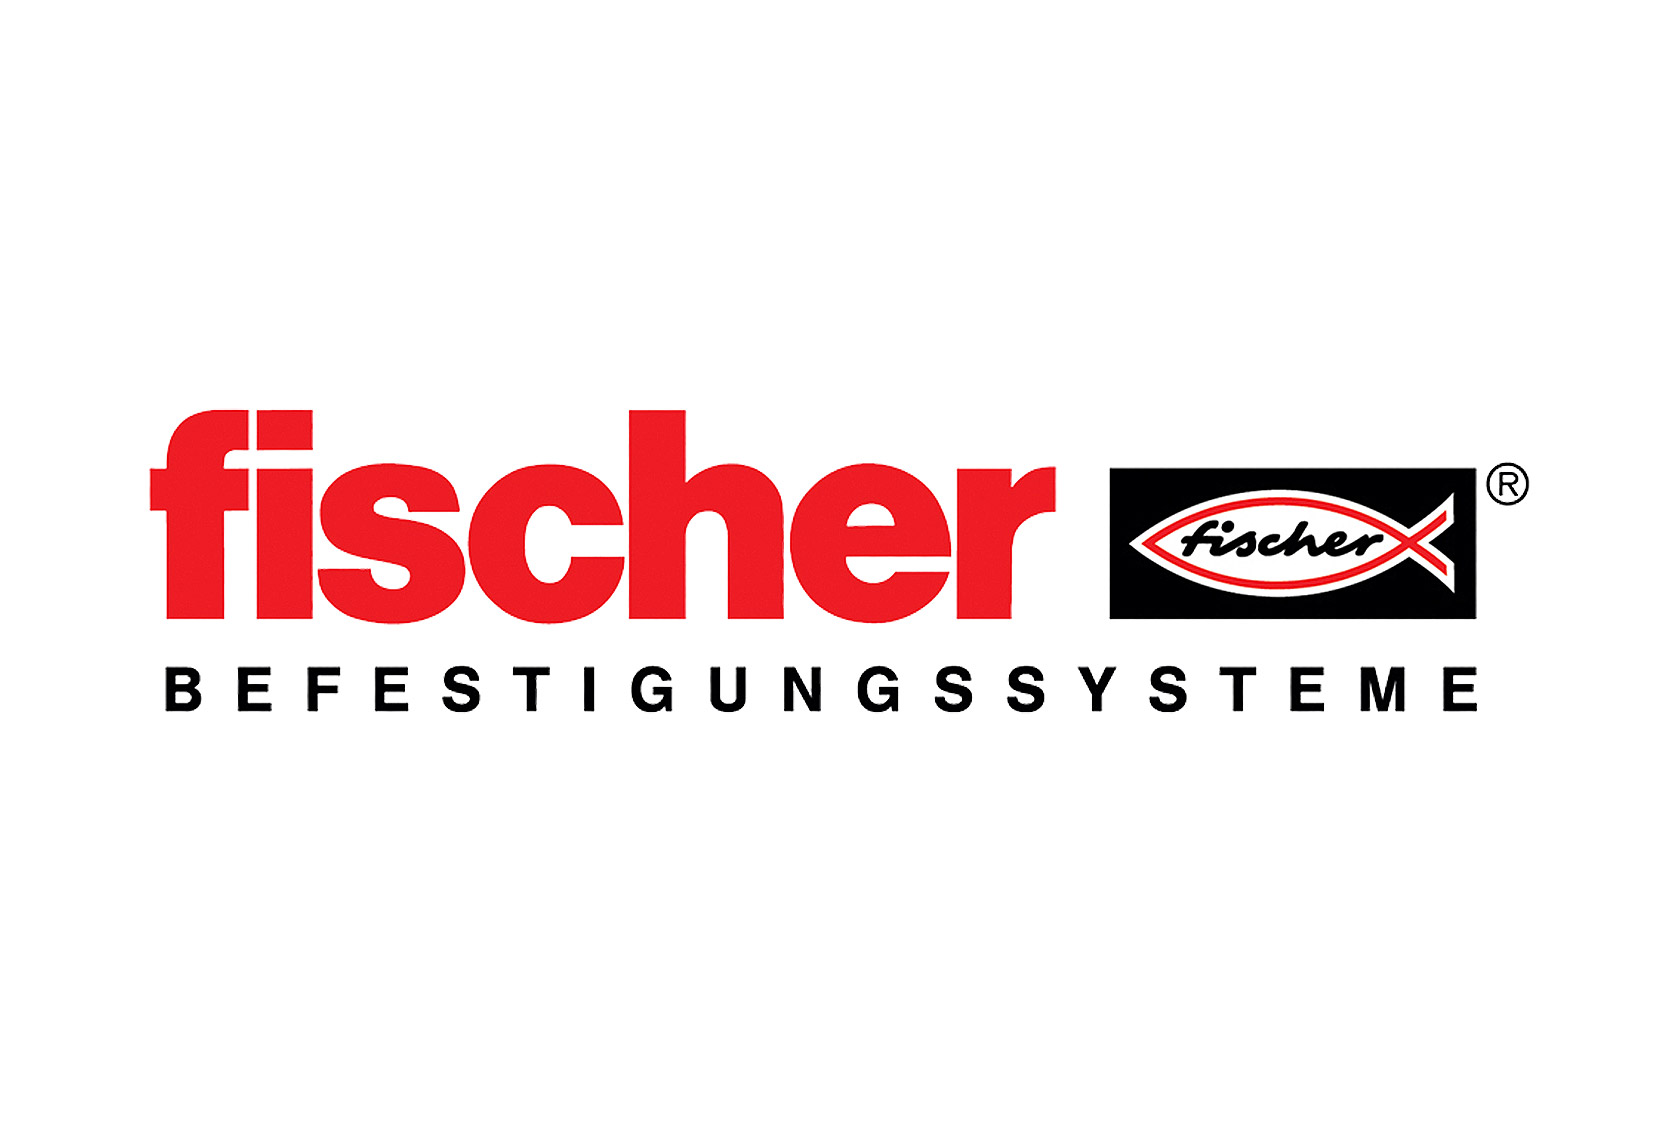 Fischer Cheville en nylon S4 Acheter chez JUMBO